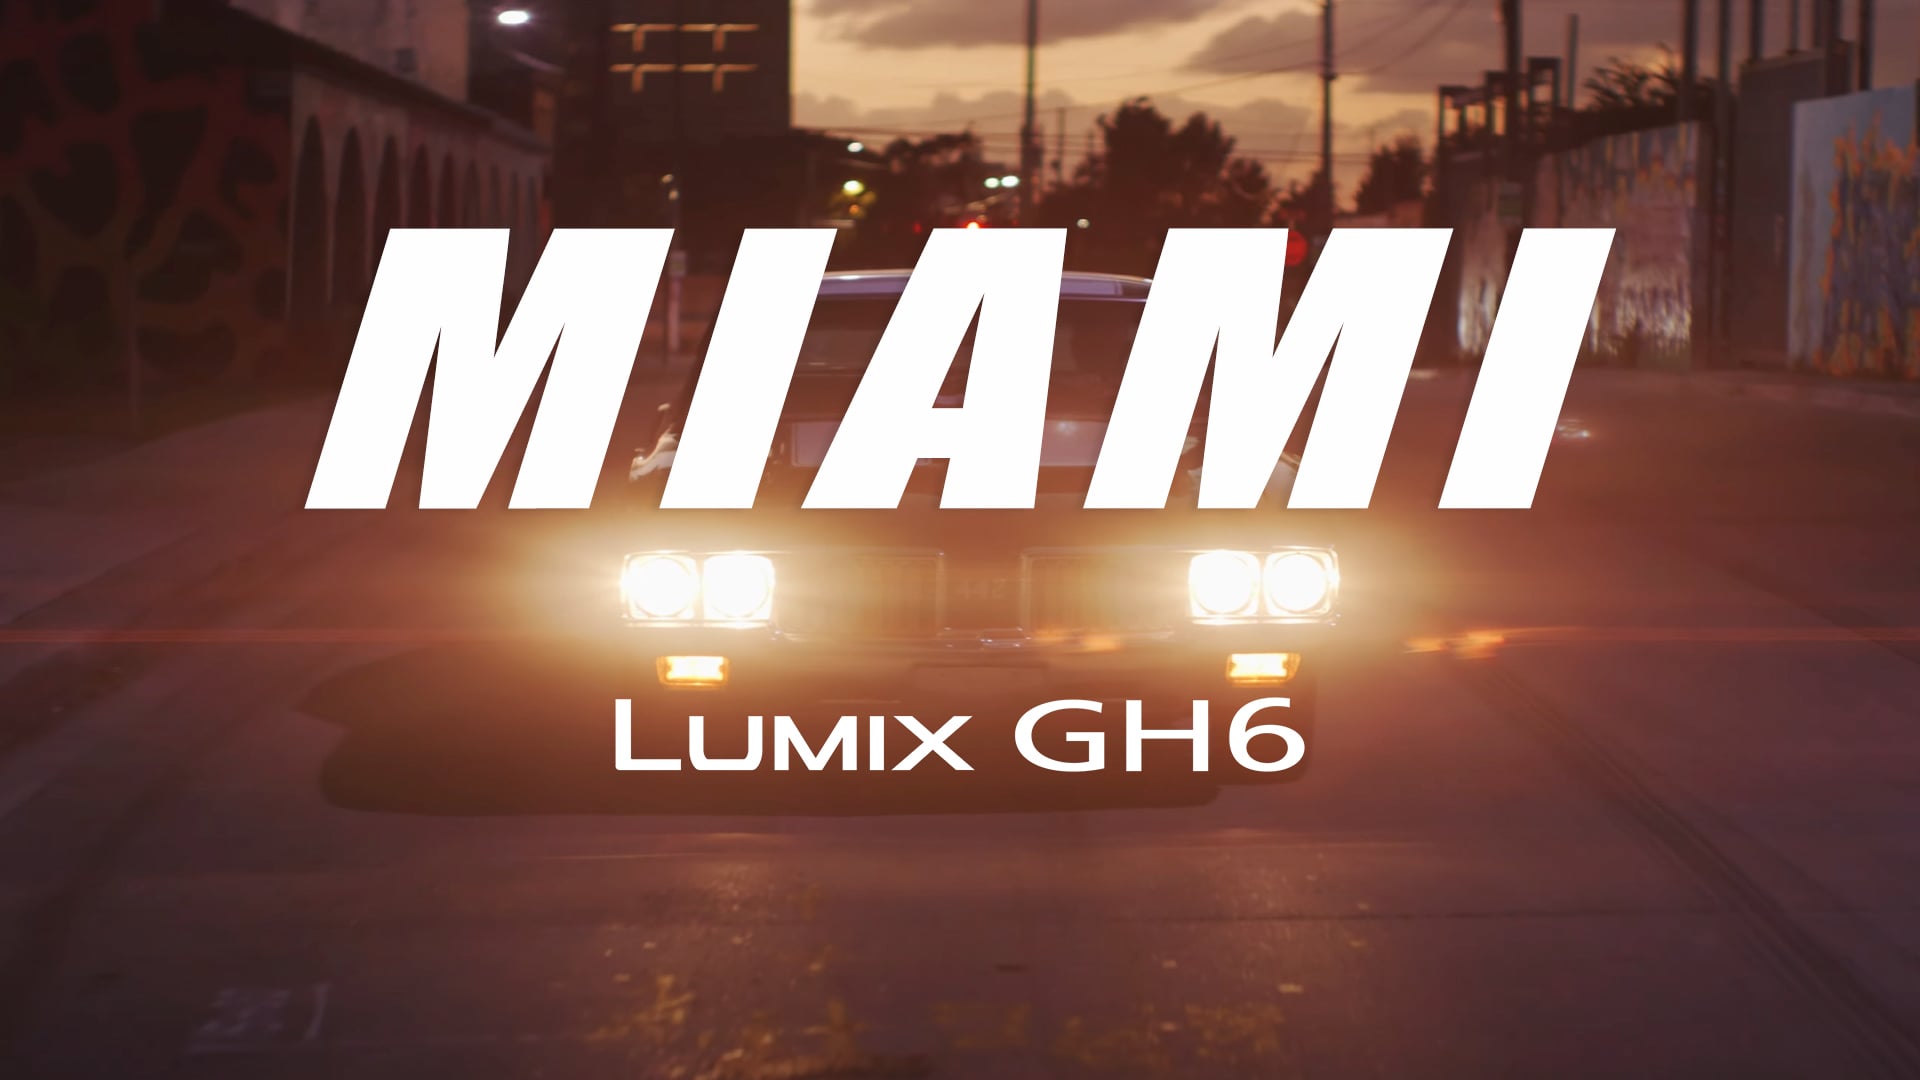 Panasonic Lumix GH6 "MIAMISTERY" (Anamorphic)